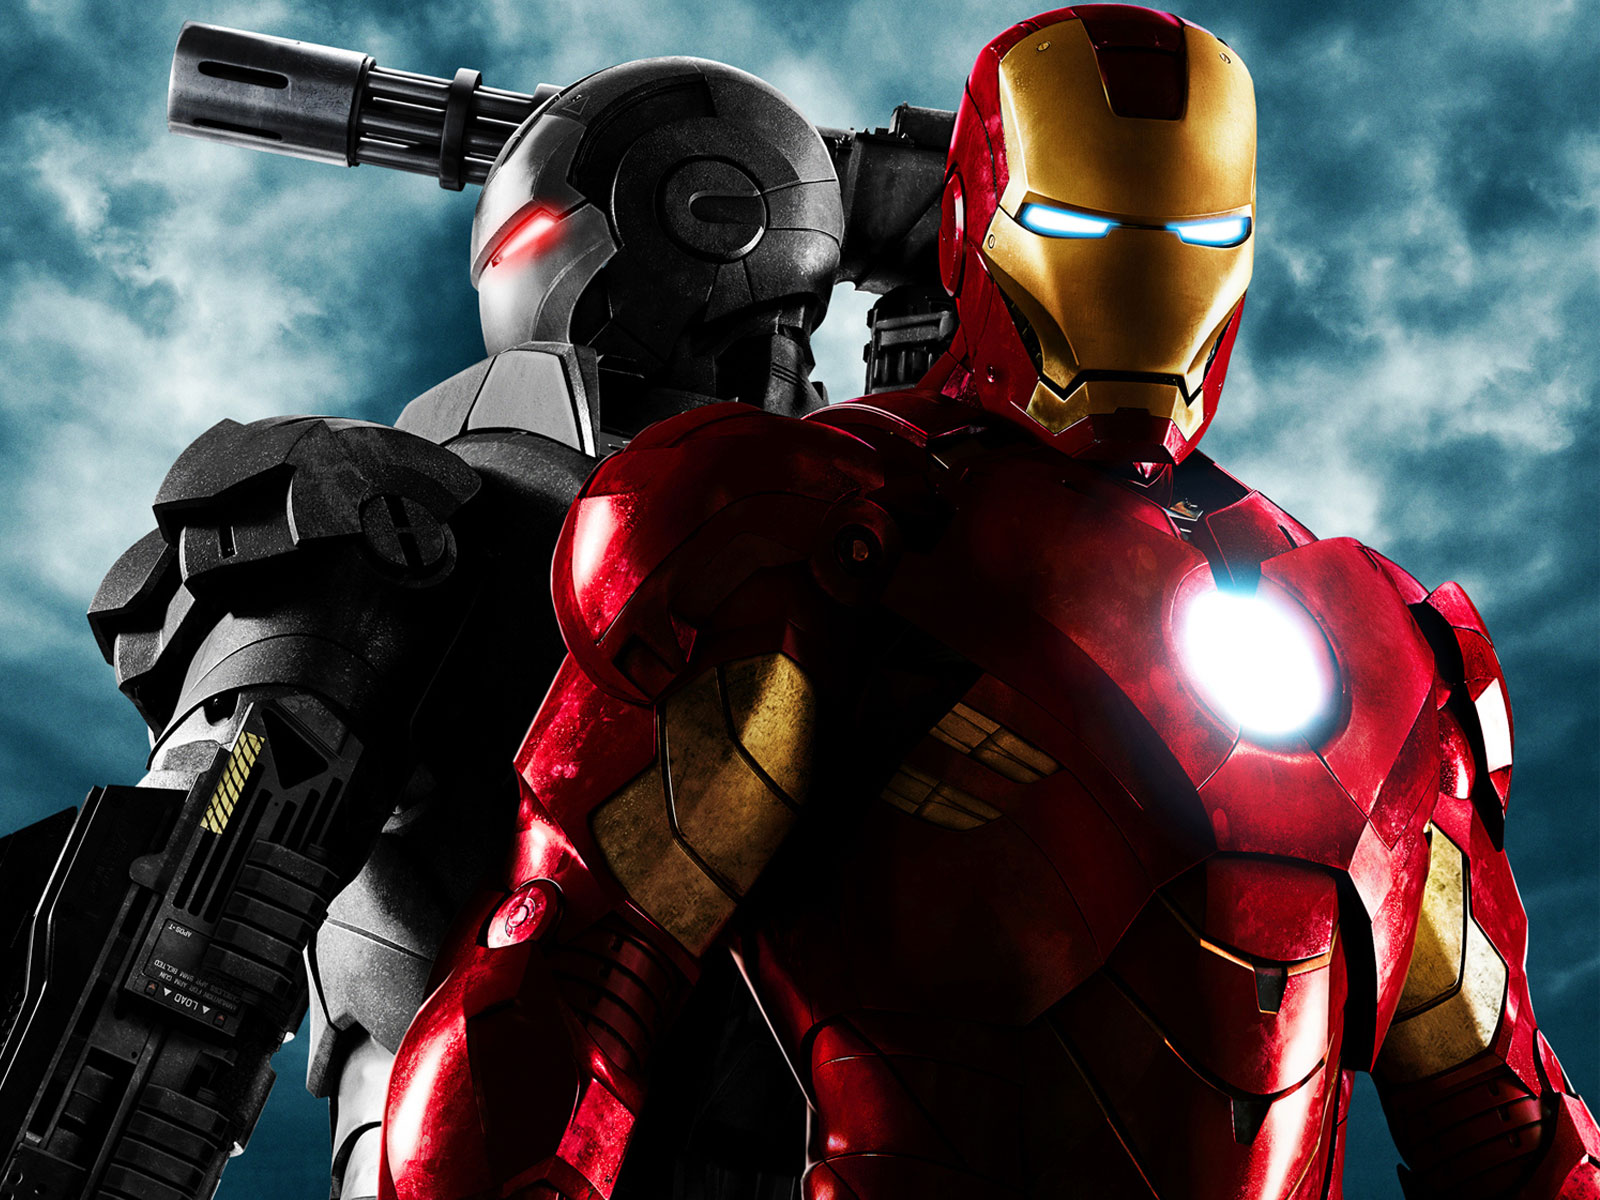 Iron Man Movie Wallpaper HD